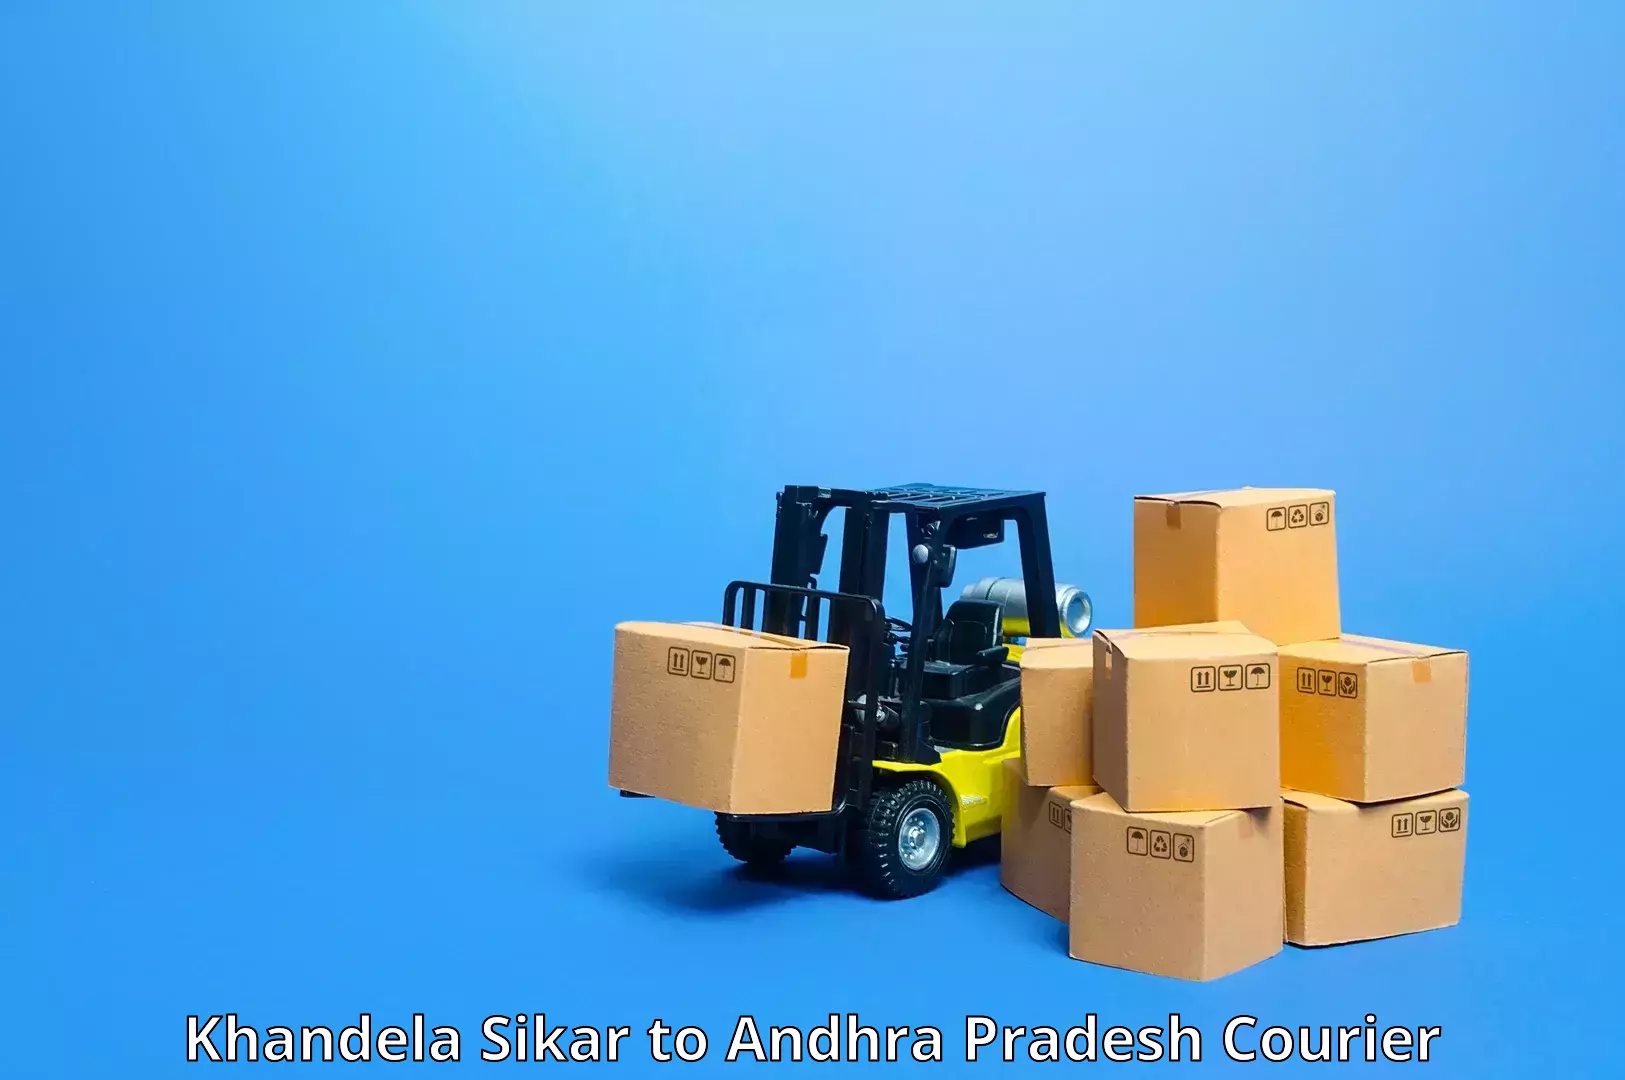 Express delivery network Khandela Sikar to Nallajerla